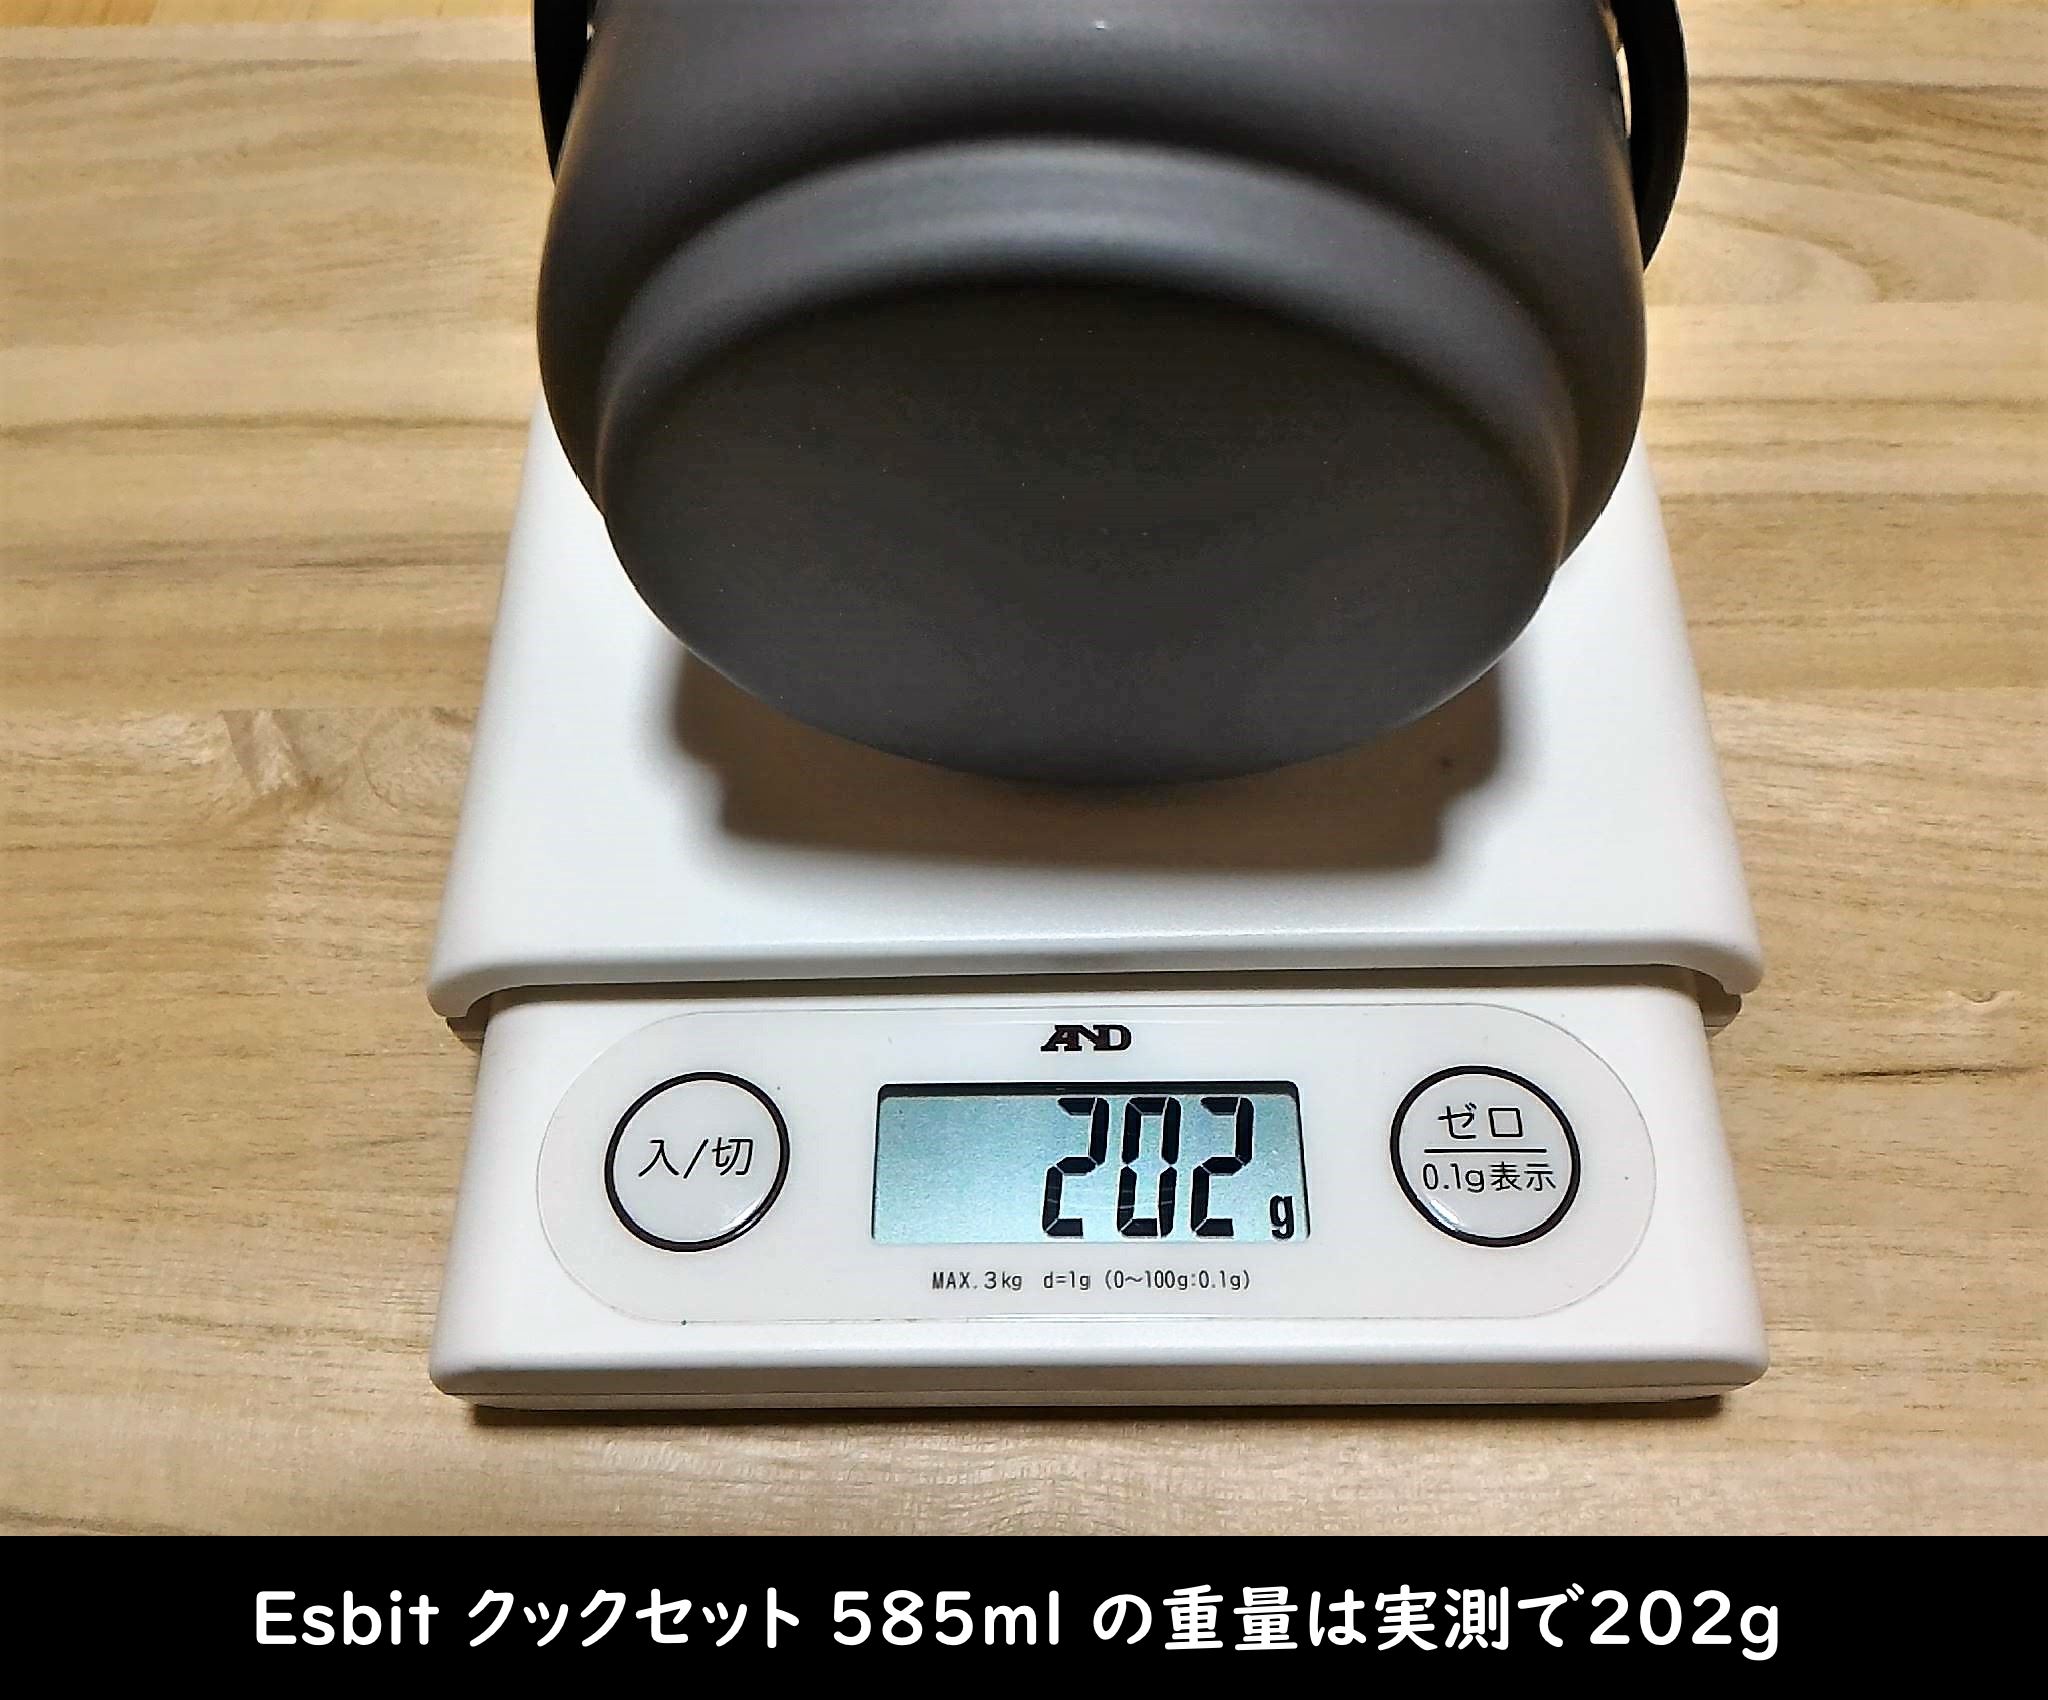 Esbit クックセット 585ml の重量は実測で202g